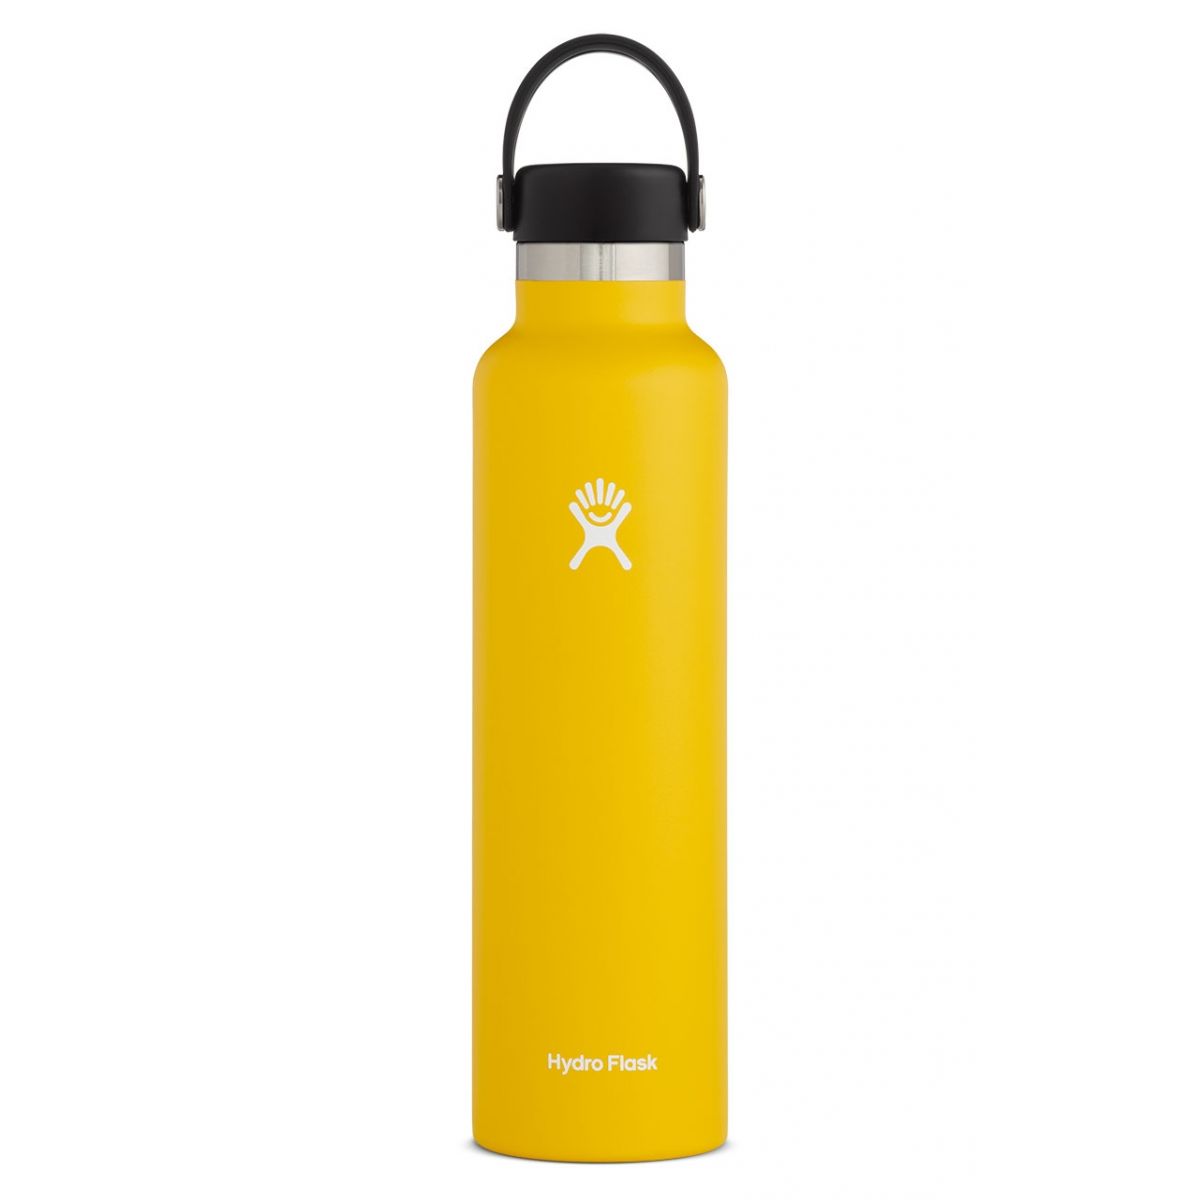 Hydro Flask Standard-Mouth Water Bottle with Flex Cap, Sunflower - 24 fl. oz.